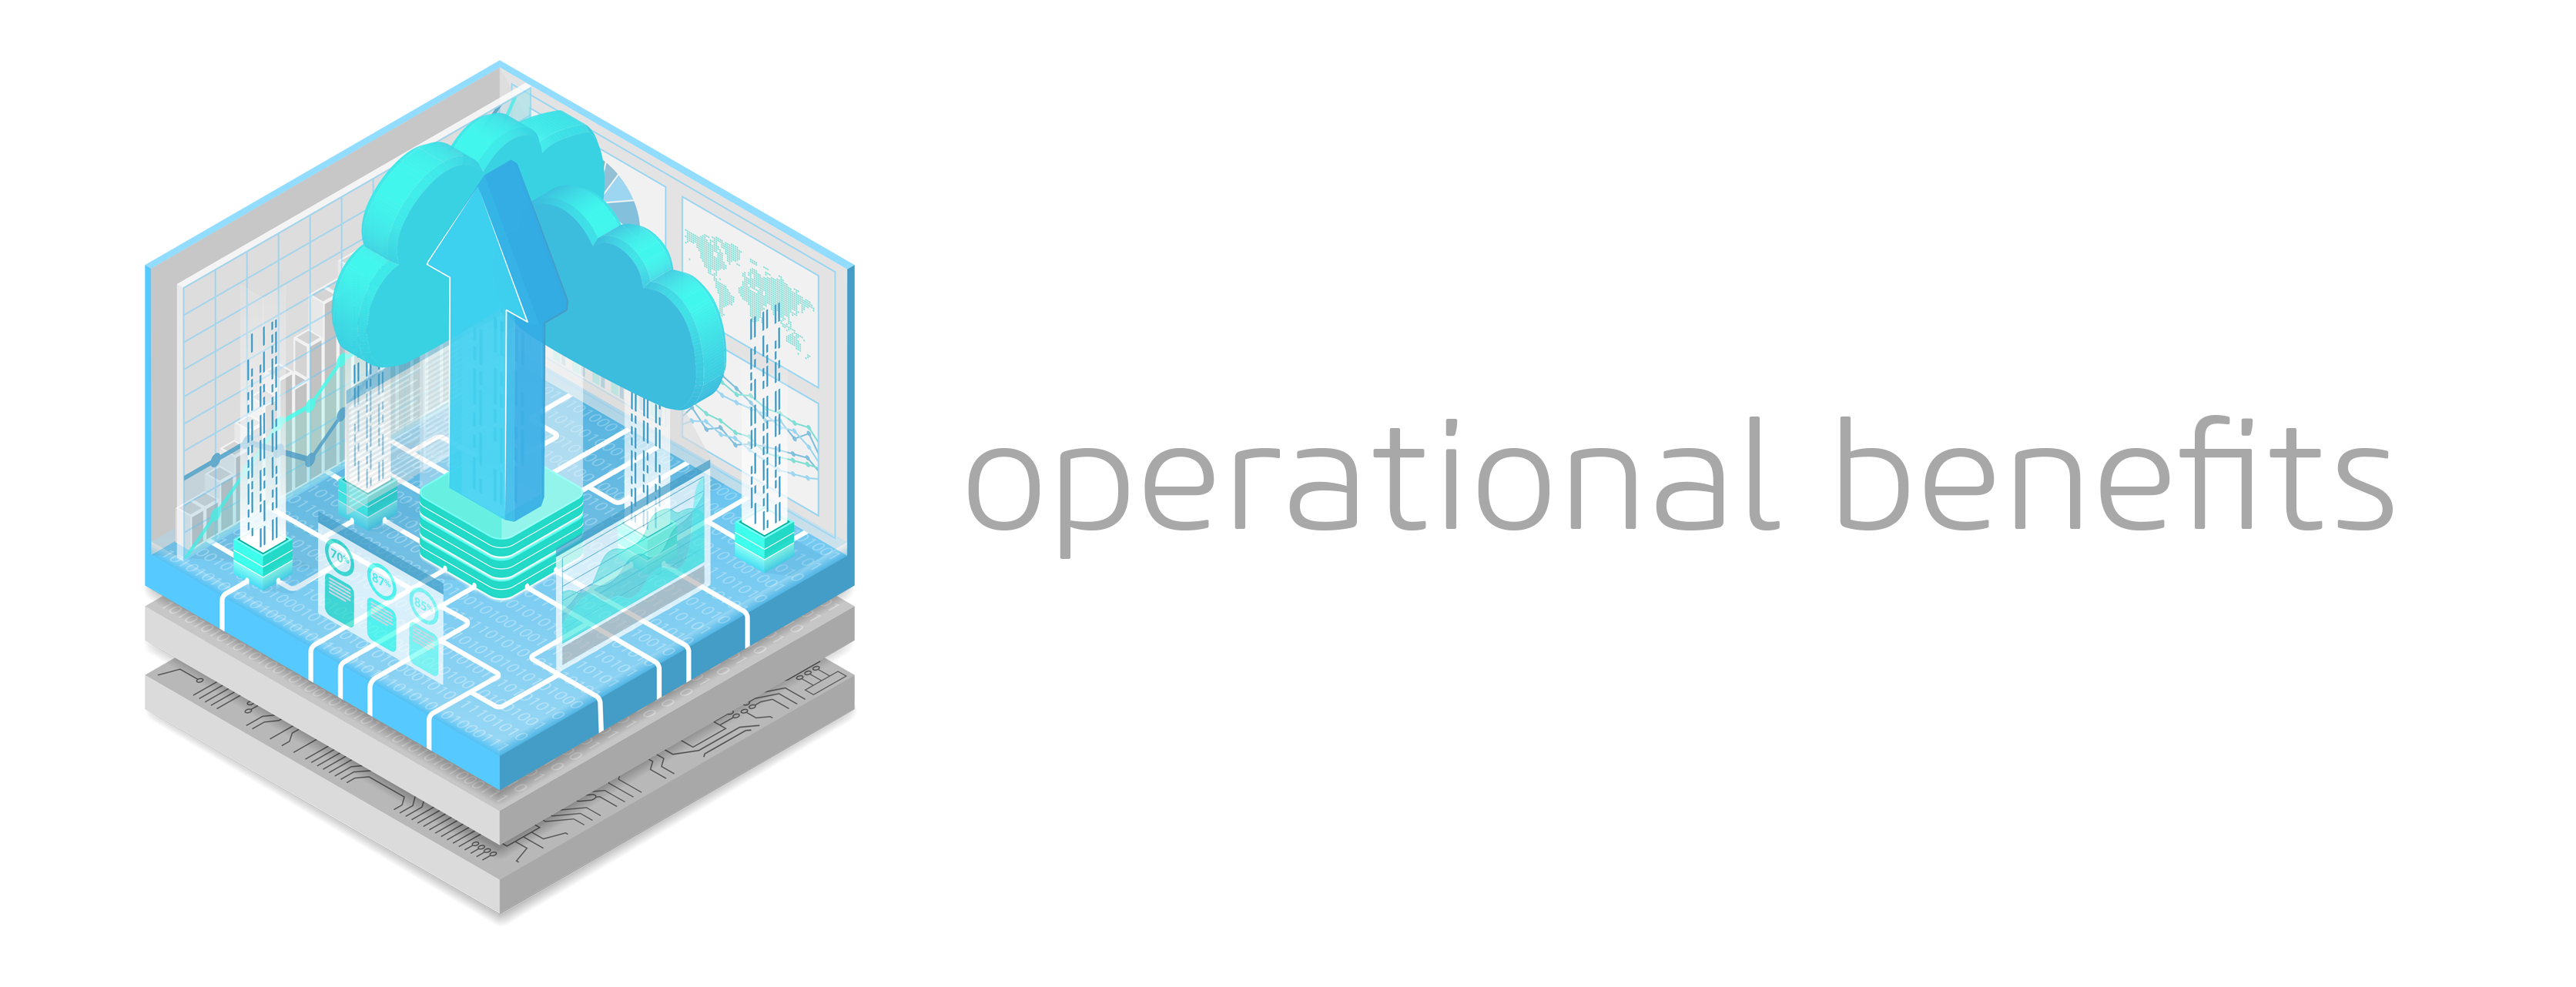 operatoinal-benefits-cloud-migration